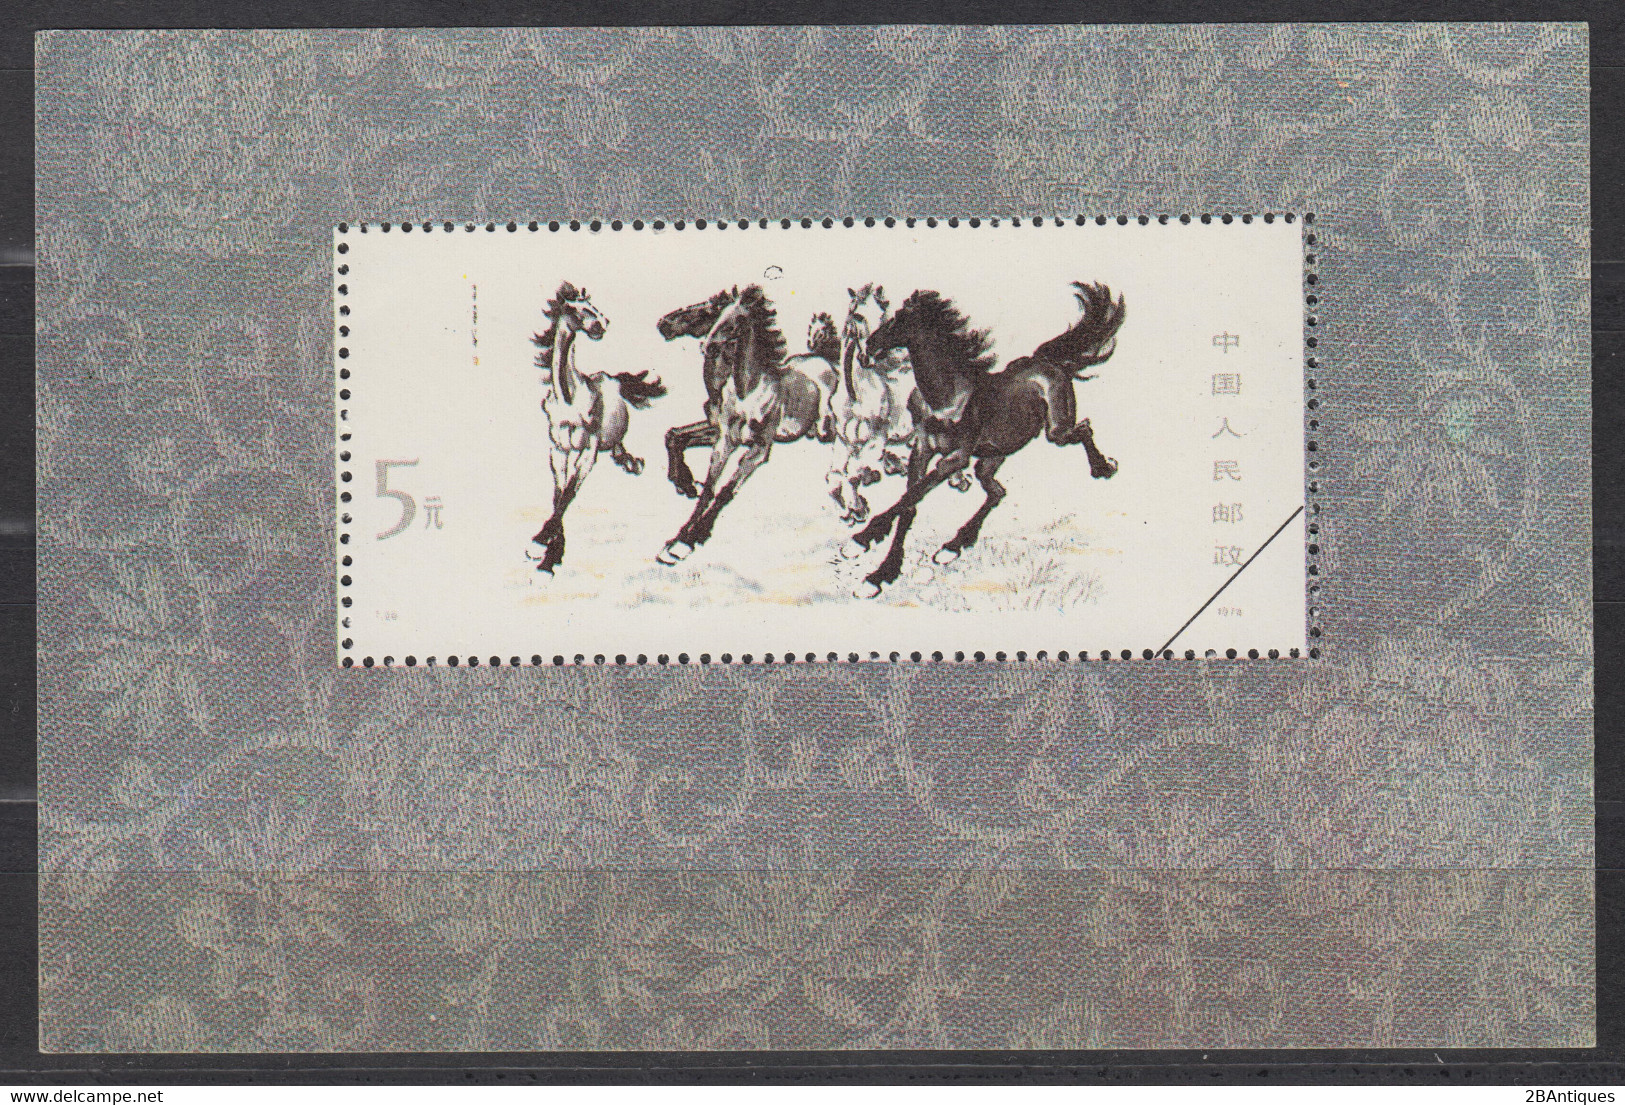 PR CHINA 1978 - Galloping Horses Minisheet Cinderella Stamp - Proofs & Reprints